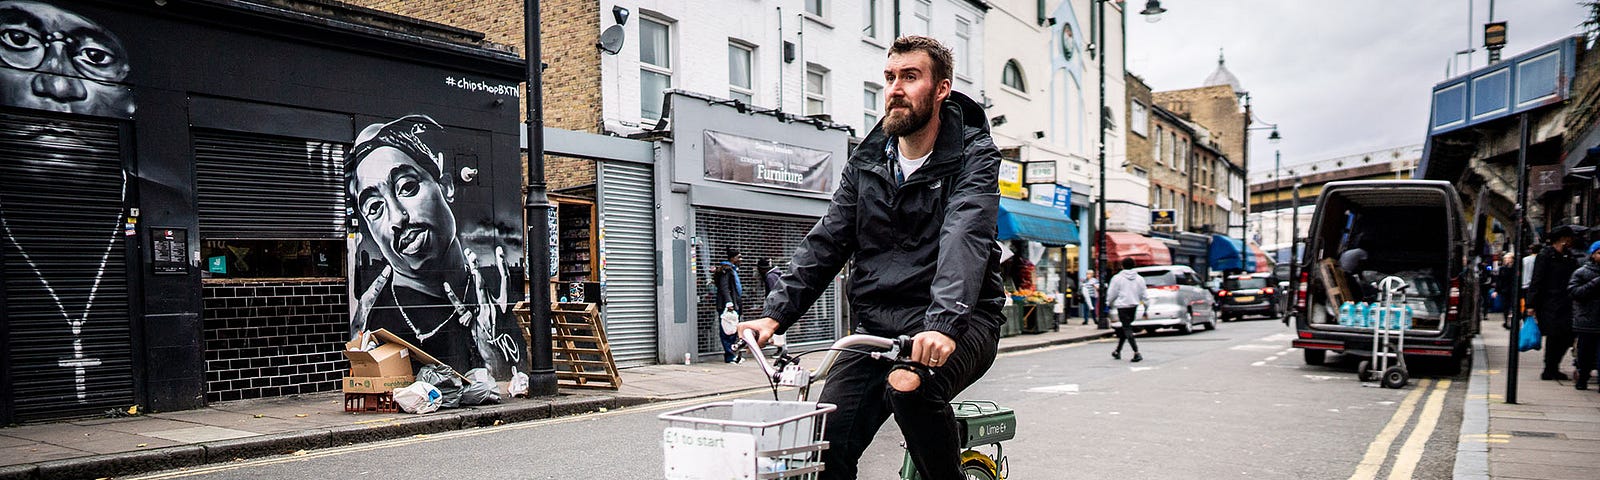 Markus Herrmann explores London by bike